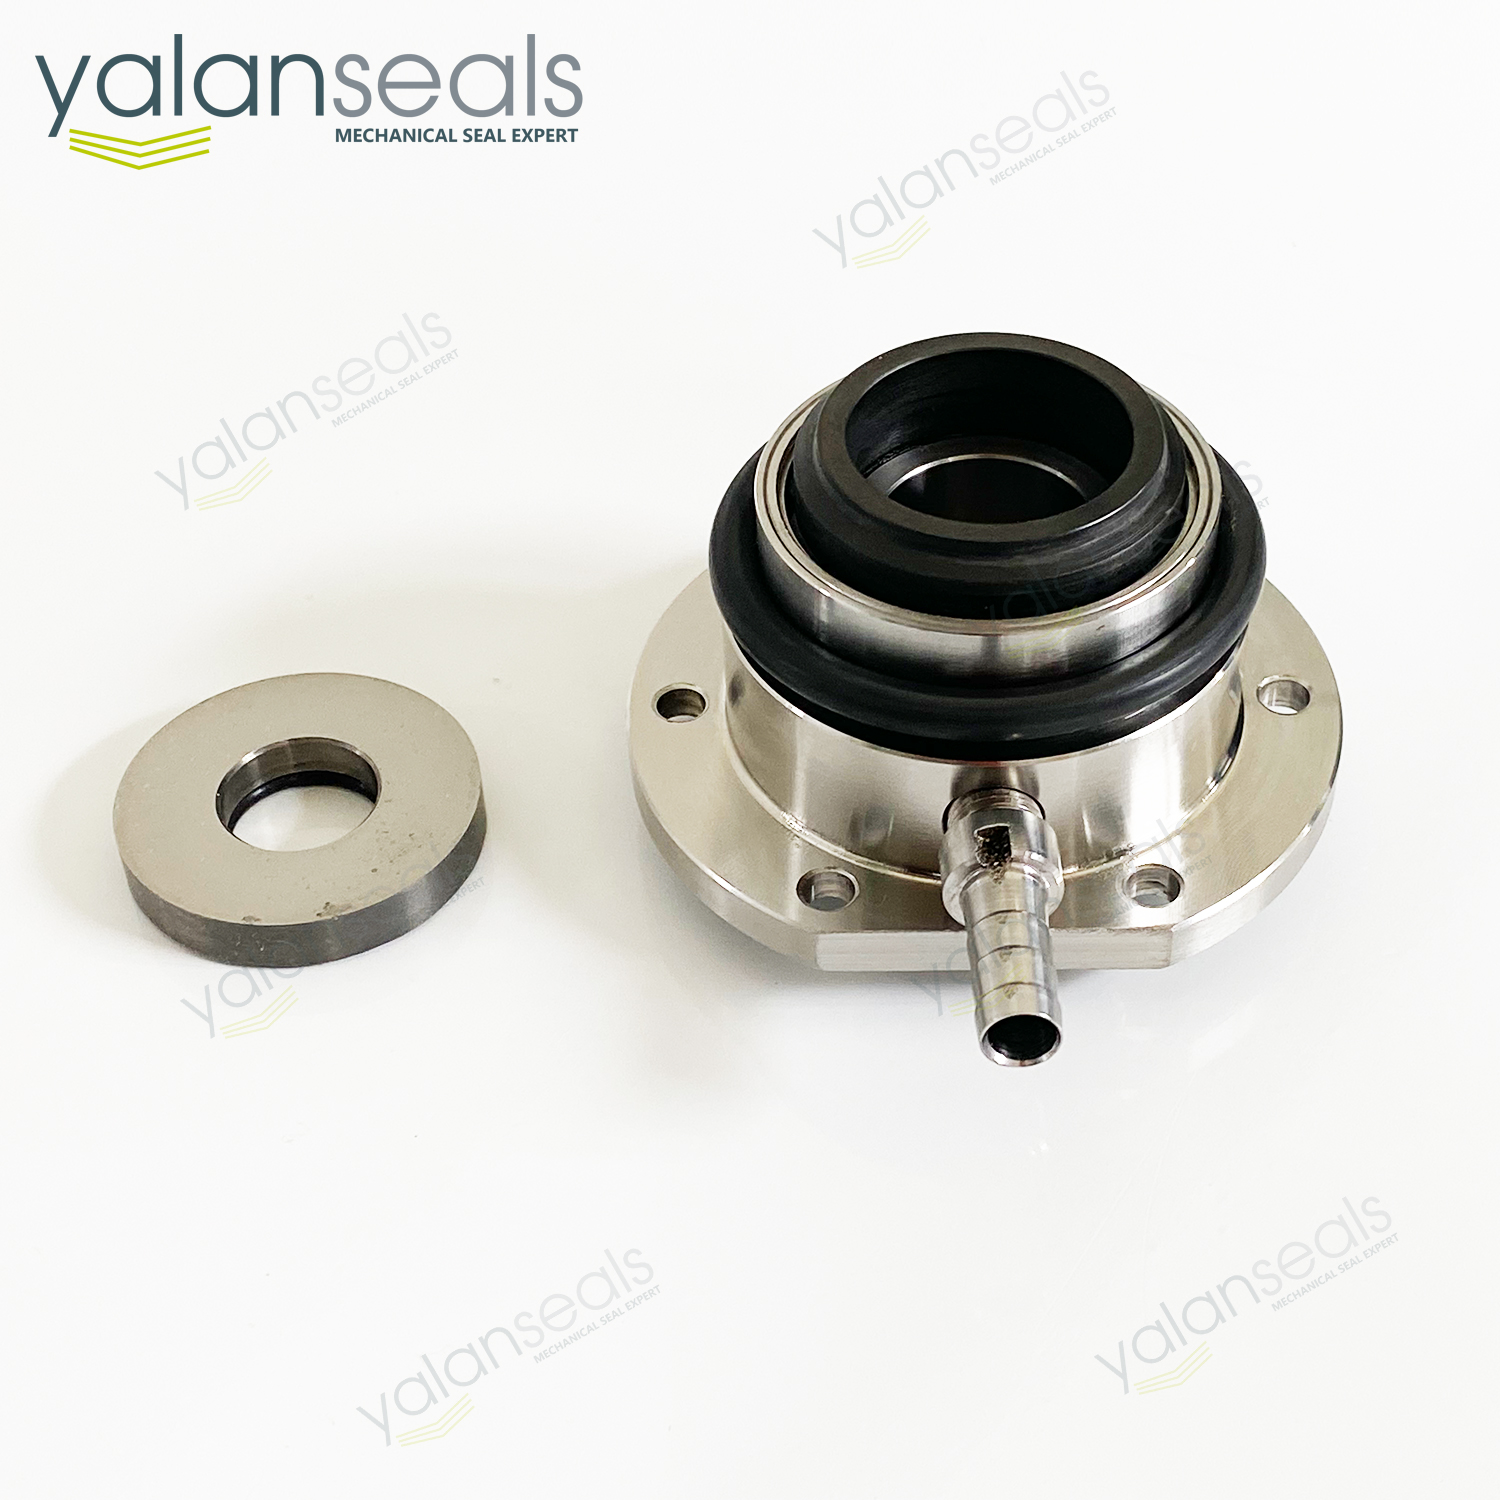 YALAN KJ23-14 Mechanical Seal for Liquid Cooling Pumps on S300 Air Defense System